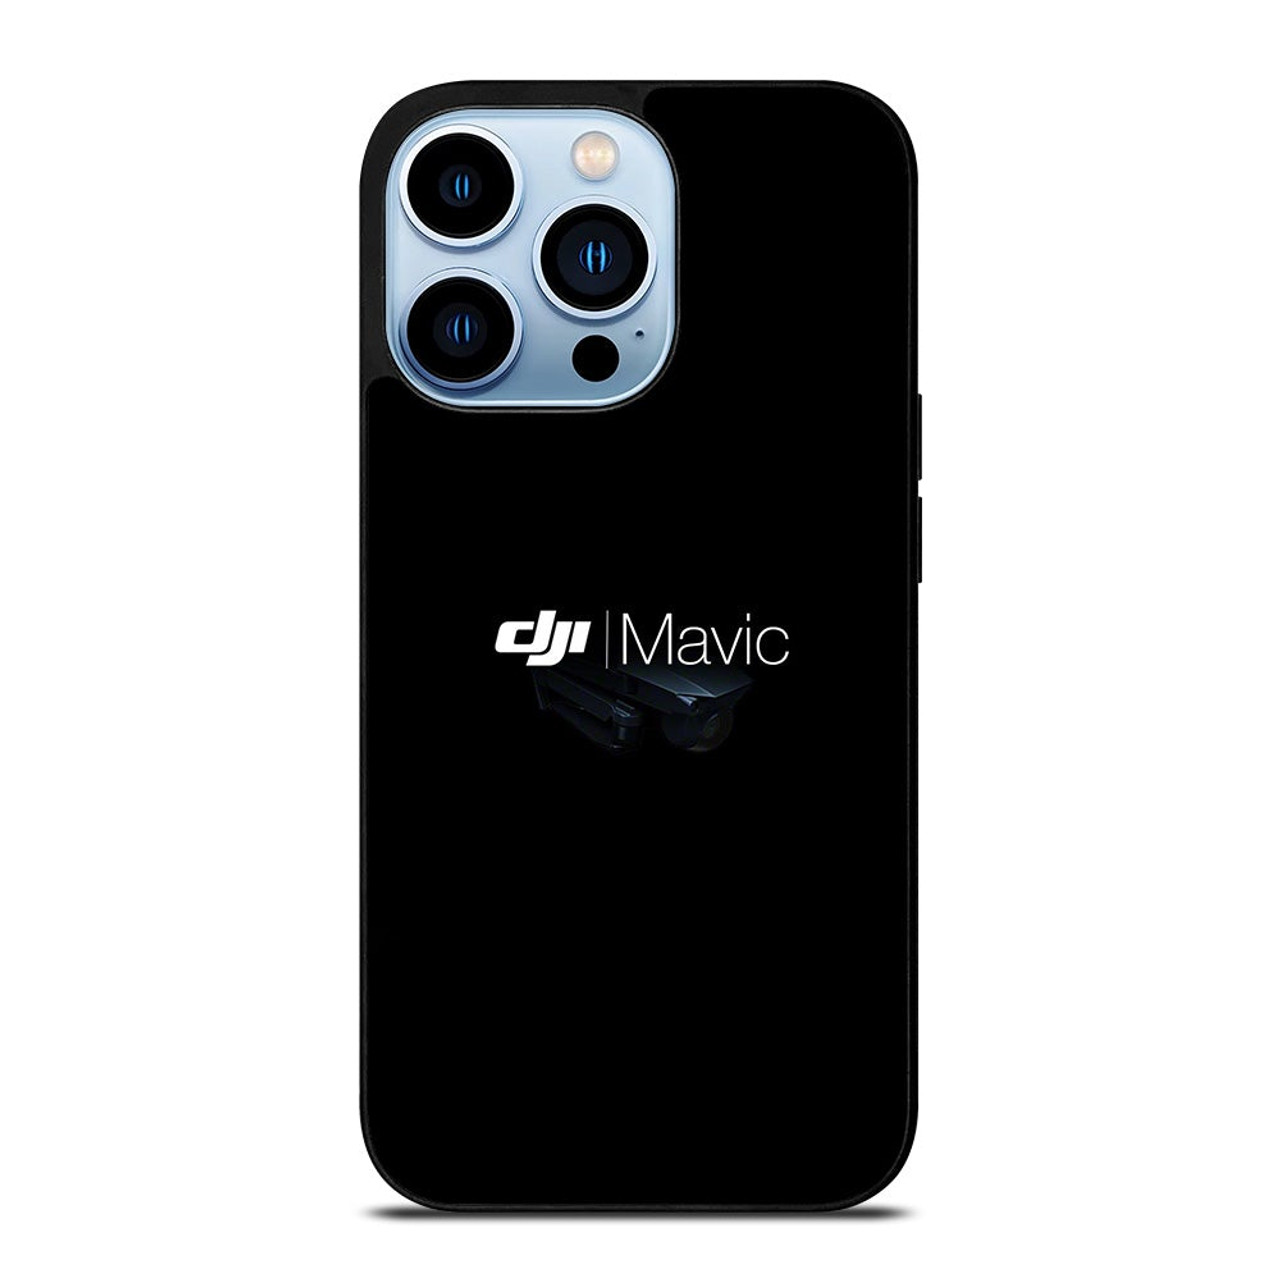 Gemoedsrust moreel racket DJI MAVIC DRONE CAMERA BLACK iPhone 13 Pro Max Case Cover